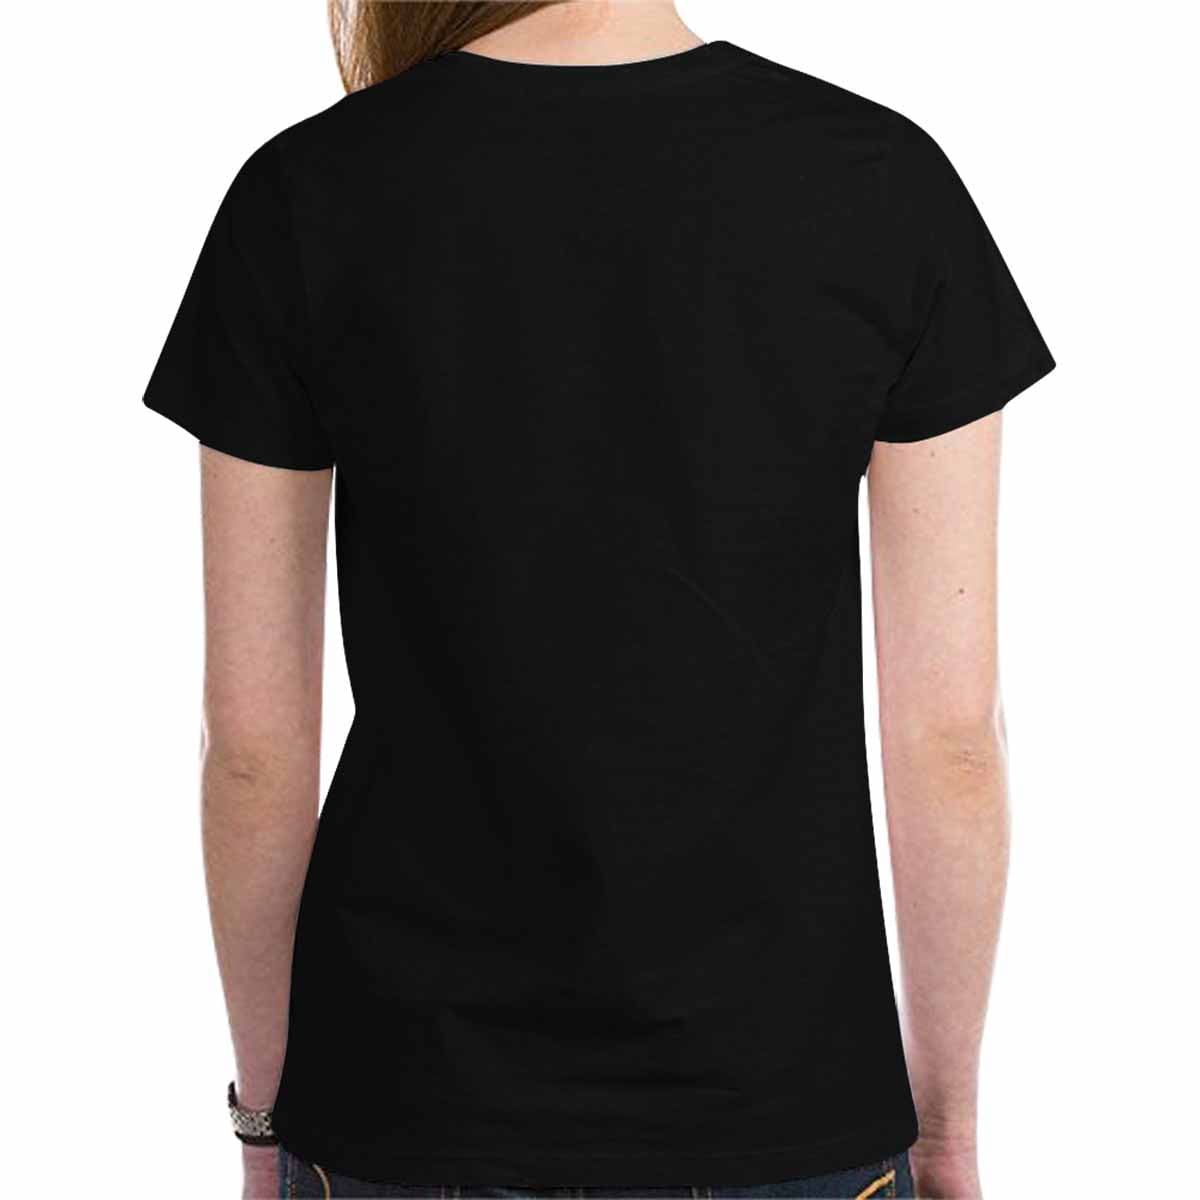 Womens T-shirt, James 5:16  - Black Graphic Tee-1